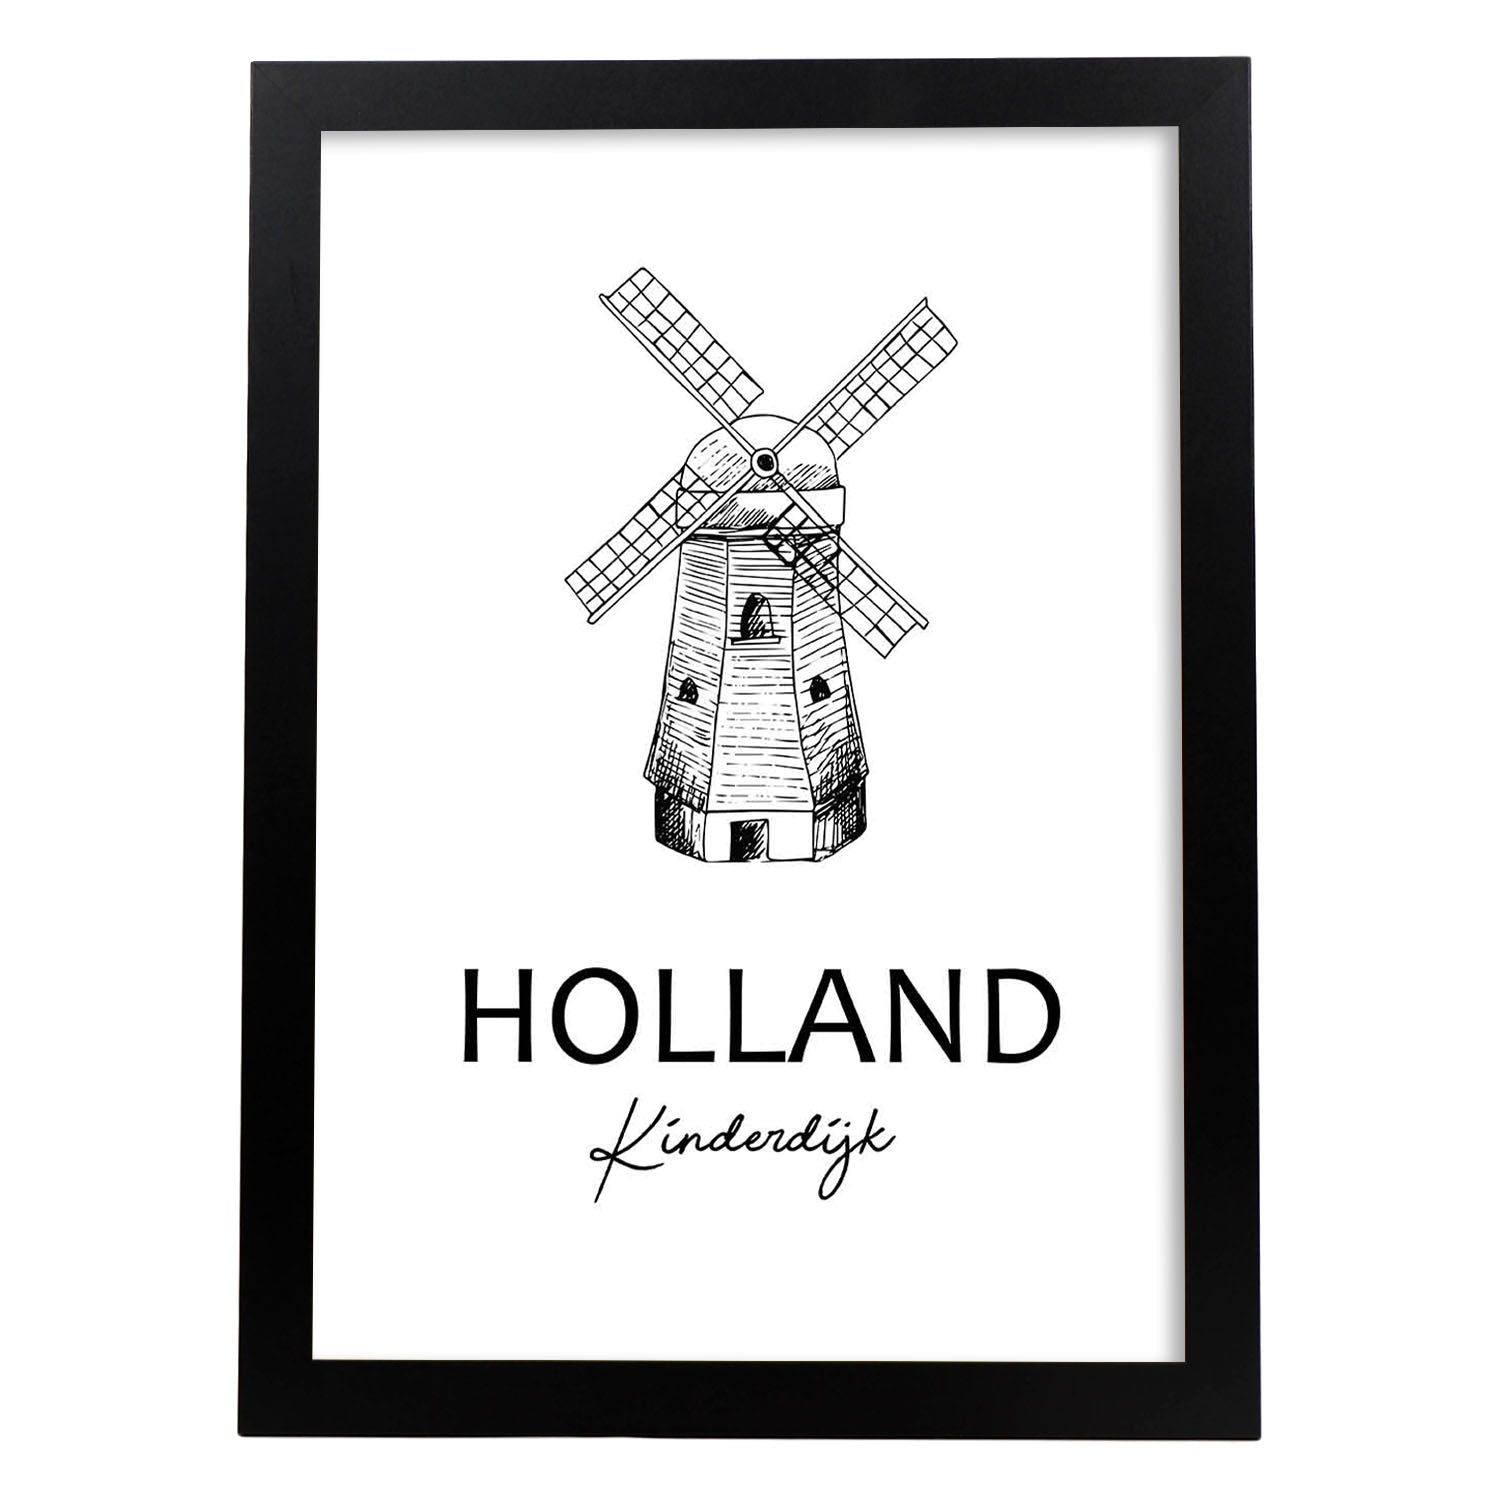 Poster de Holanda - Kinderdijk. Láminas con monumentos de ciudades.-Artwork-Nacnic-A3-Marco Negro-Nacnic Estudio SL